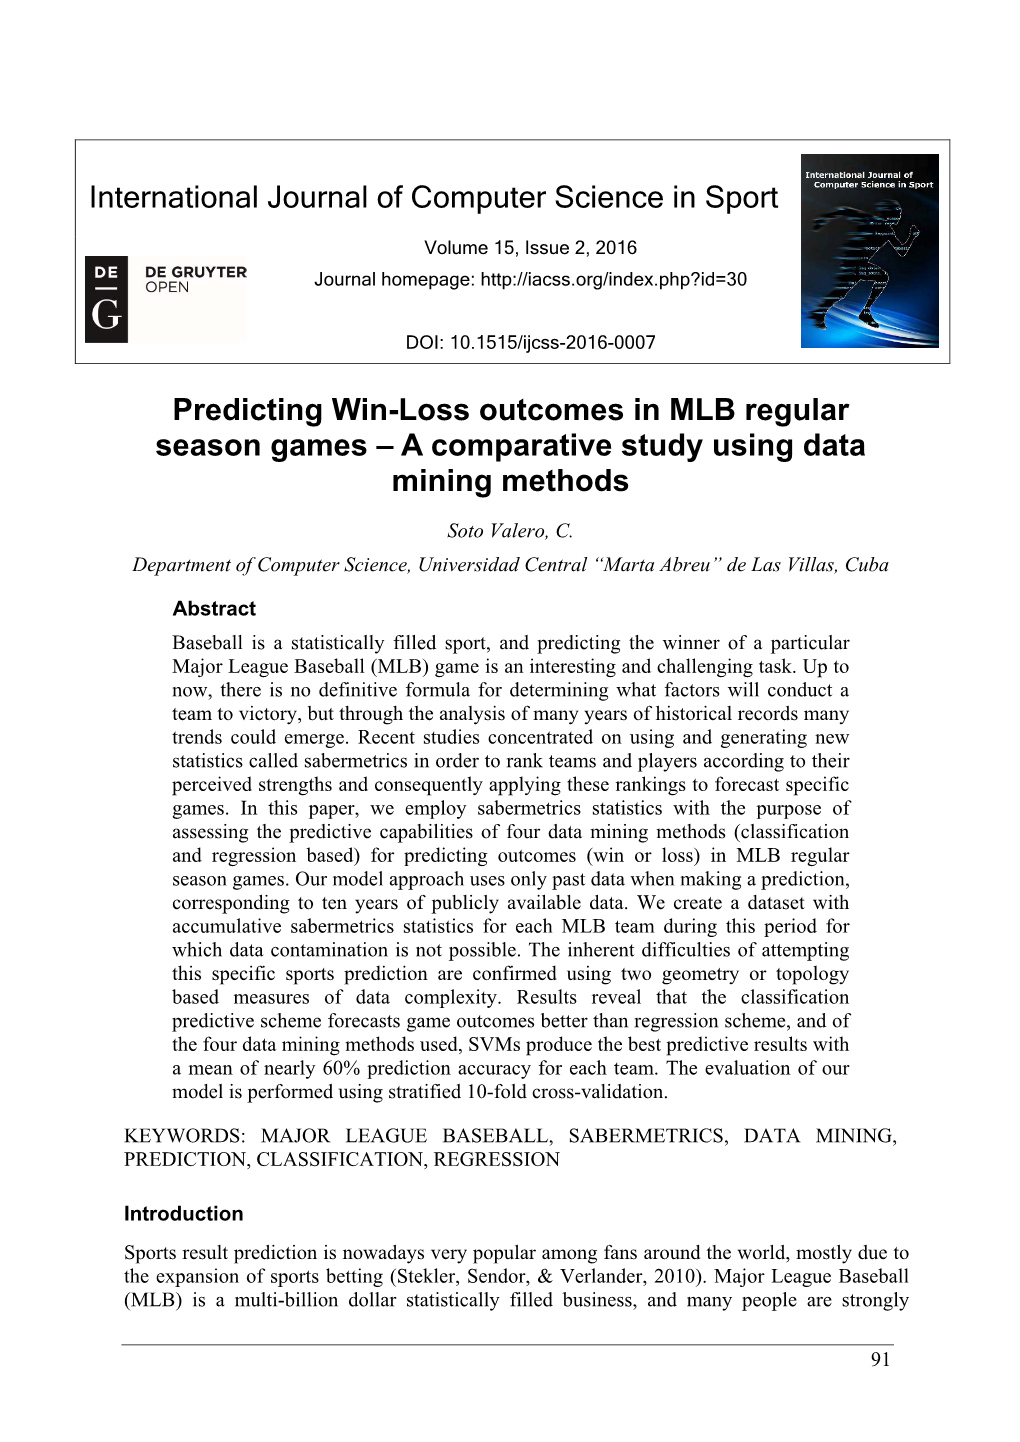 Predicting Win-Loss Outcomes in MLB Regular Season Games – a Comparative Study Using Data Mining Methods